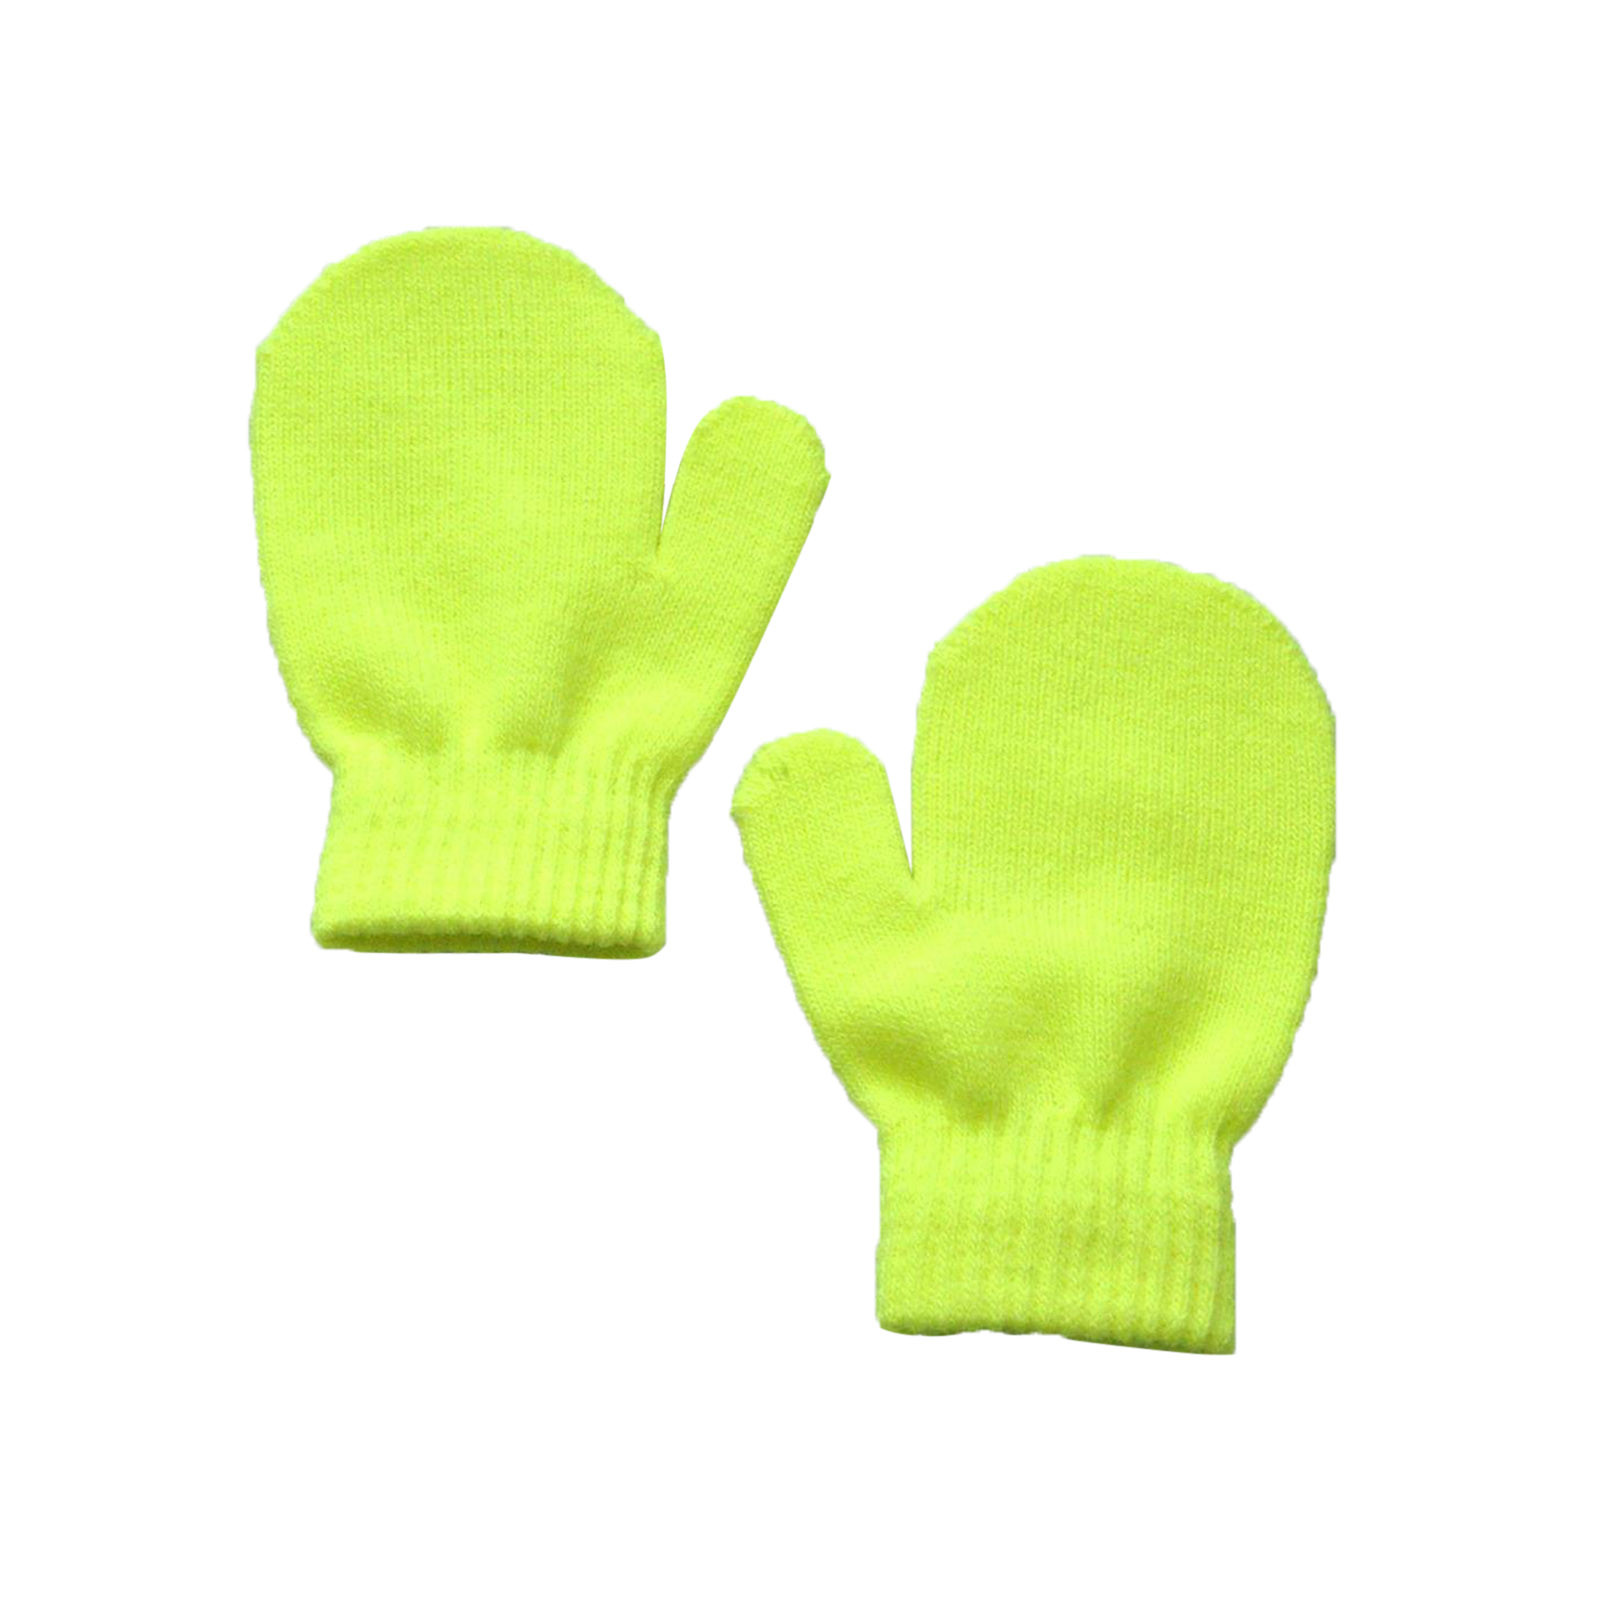 Children's mittens Infant Baby gloves Knit Mittens Hot Girls Boys Of Winter Warm Gloves baby accessories guantes sin dedos